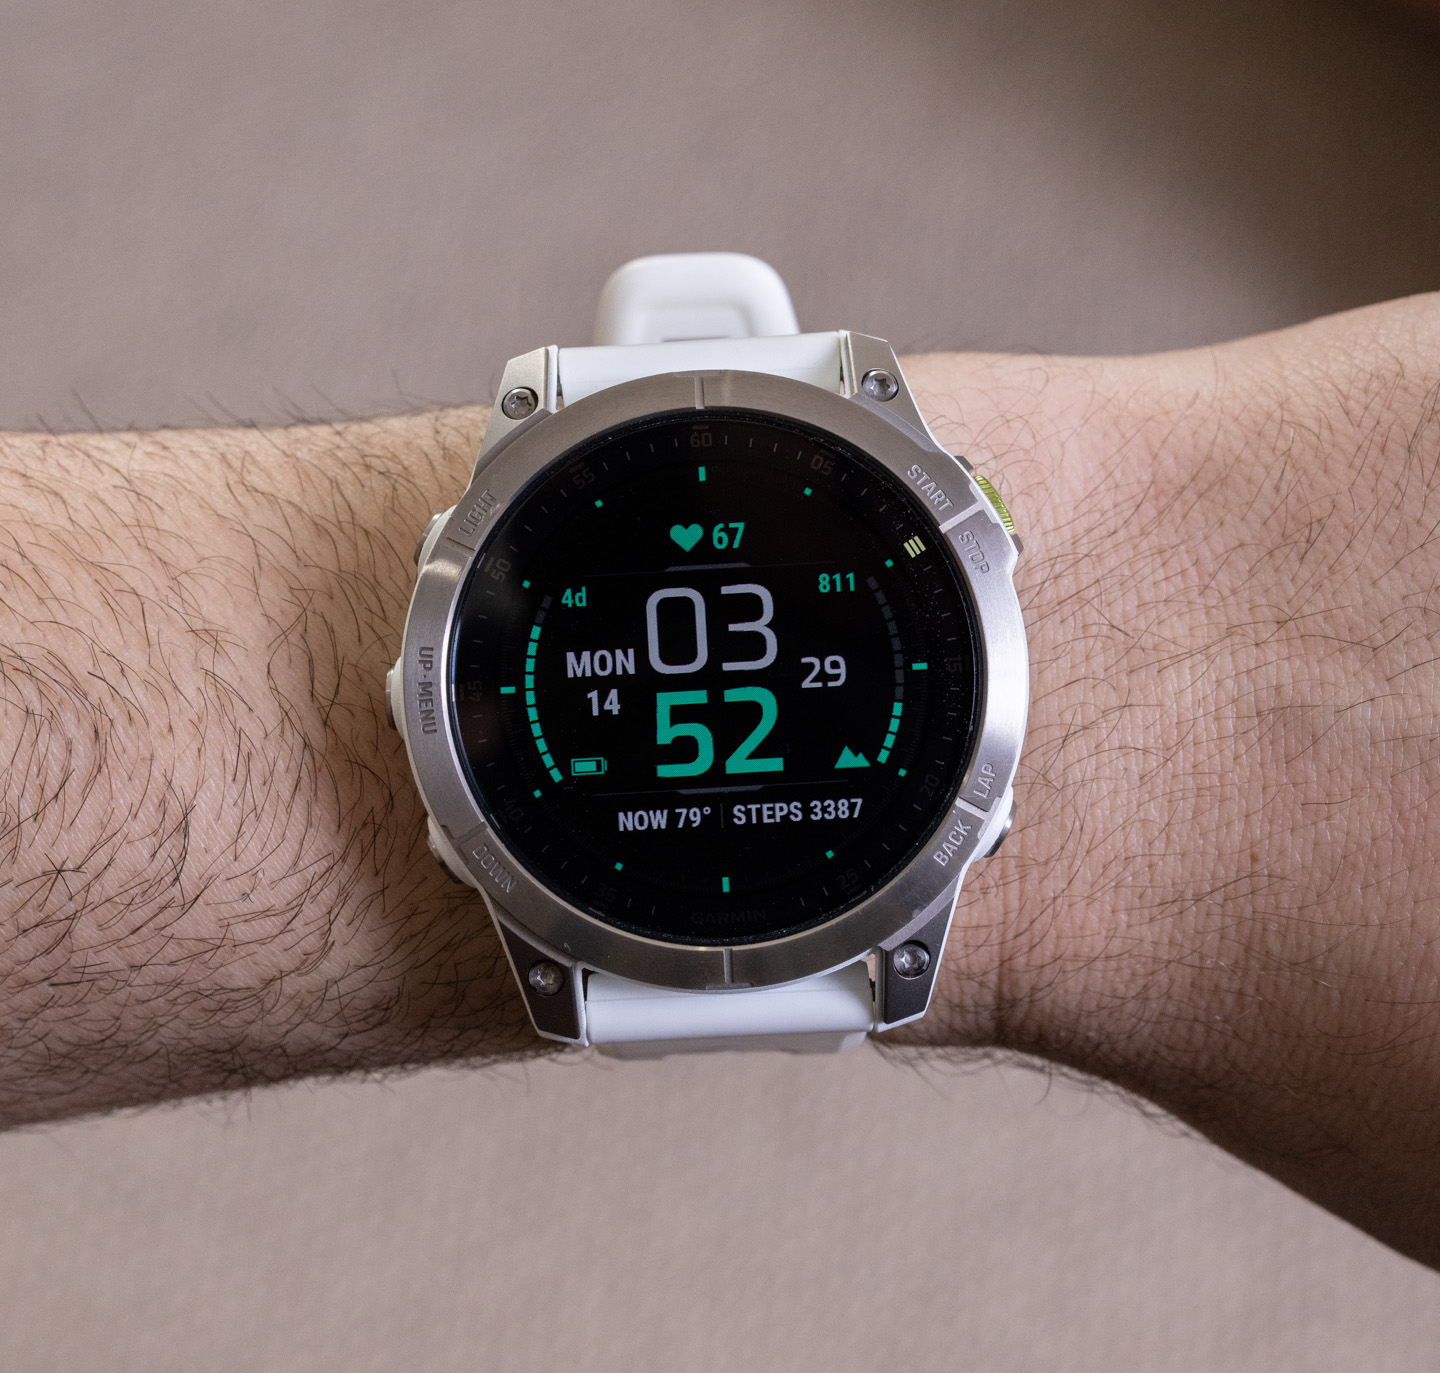 Garmin Epix Gen 2 review: The ultimate fitness watch